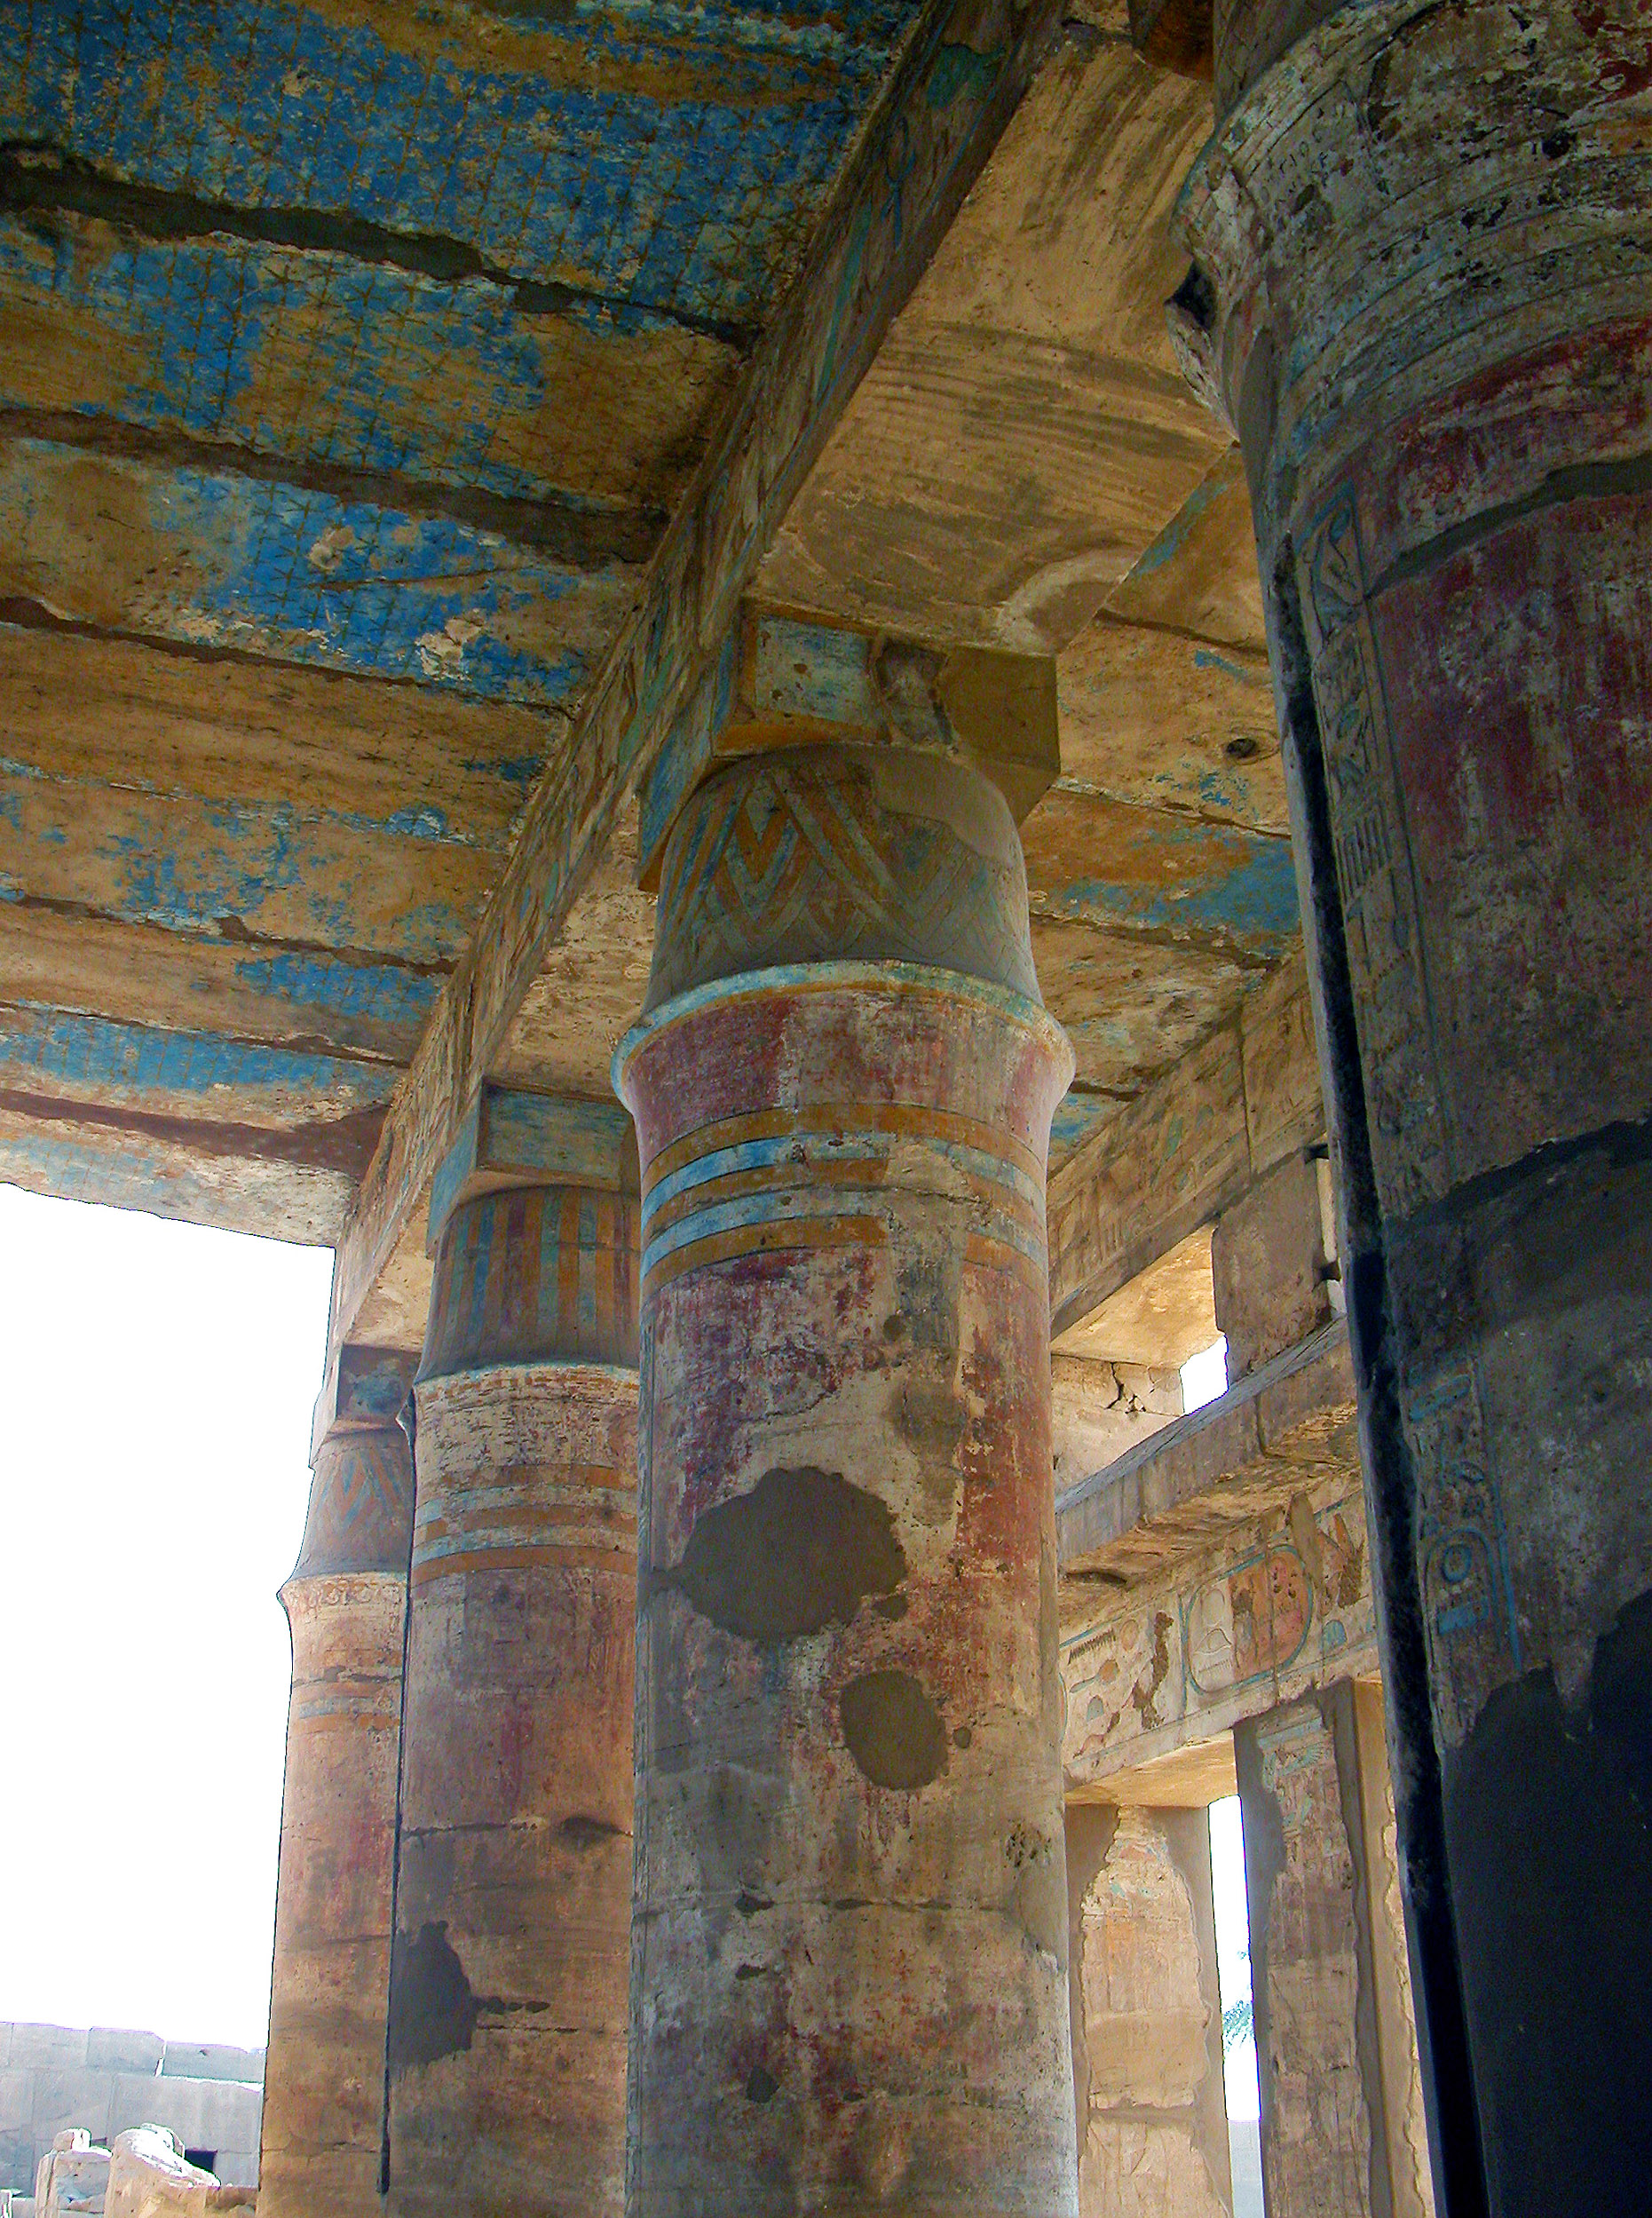 temple of amun at karnak